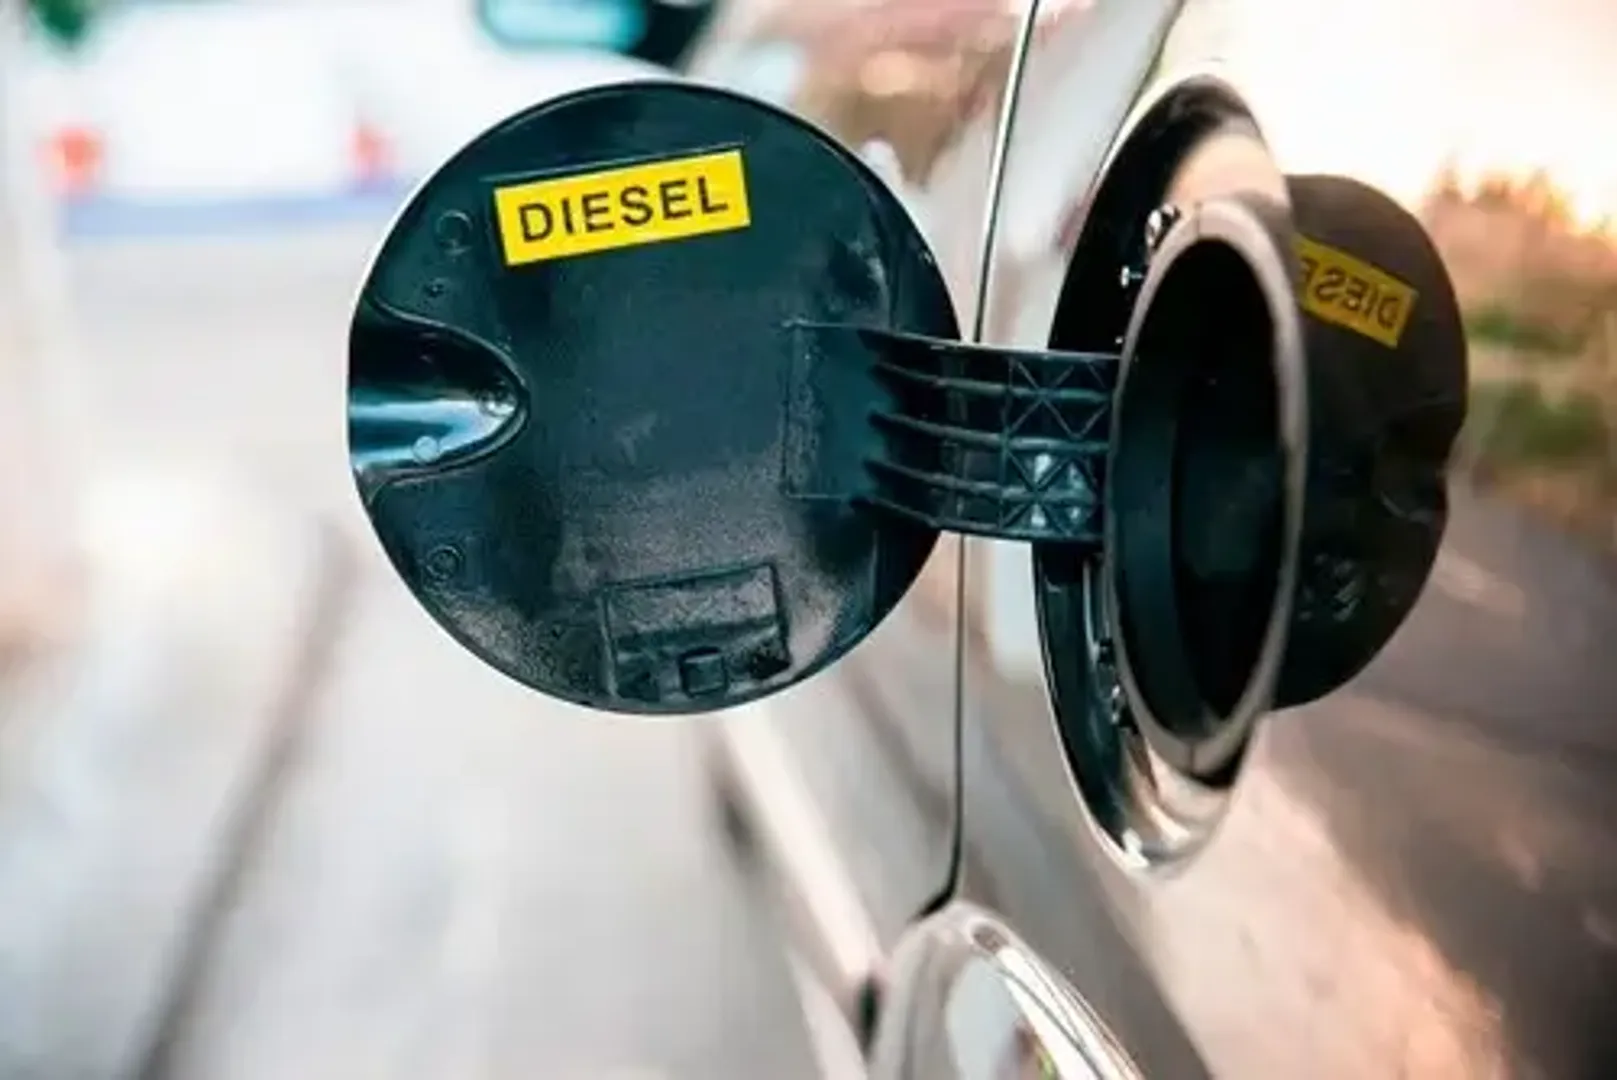 A close-up image of a diesel fuel cap.